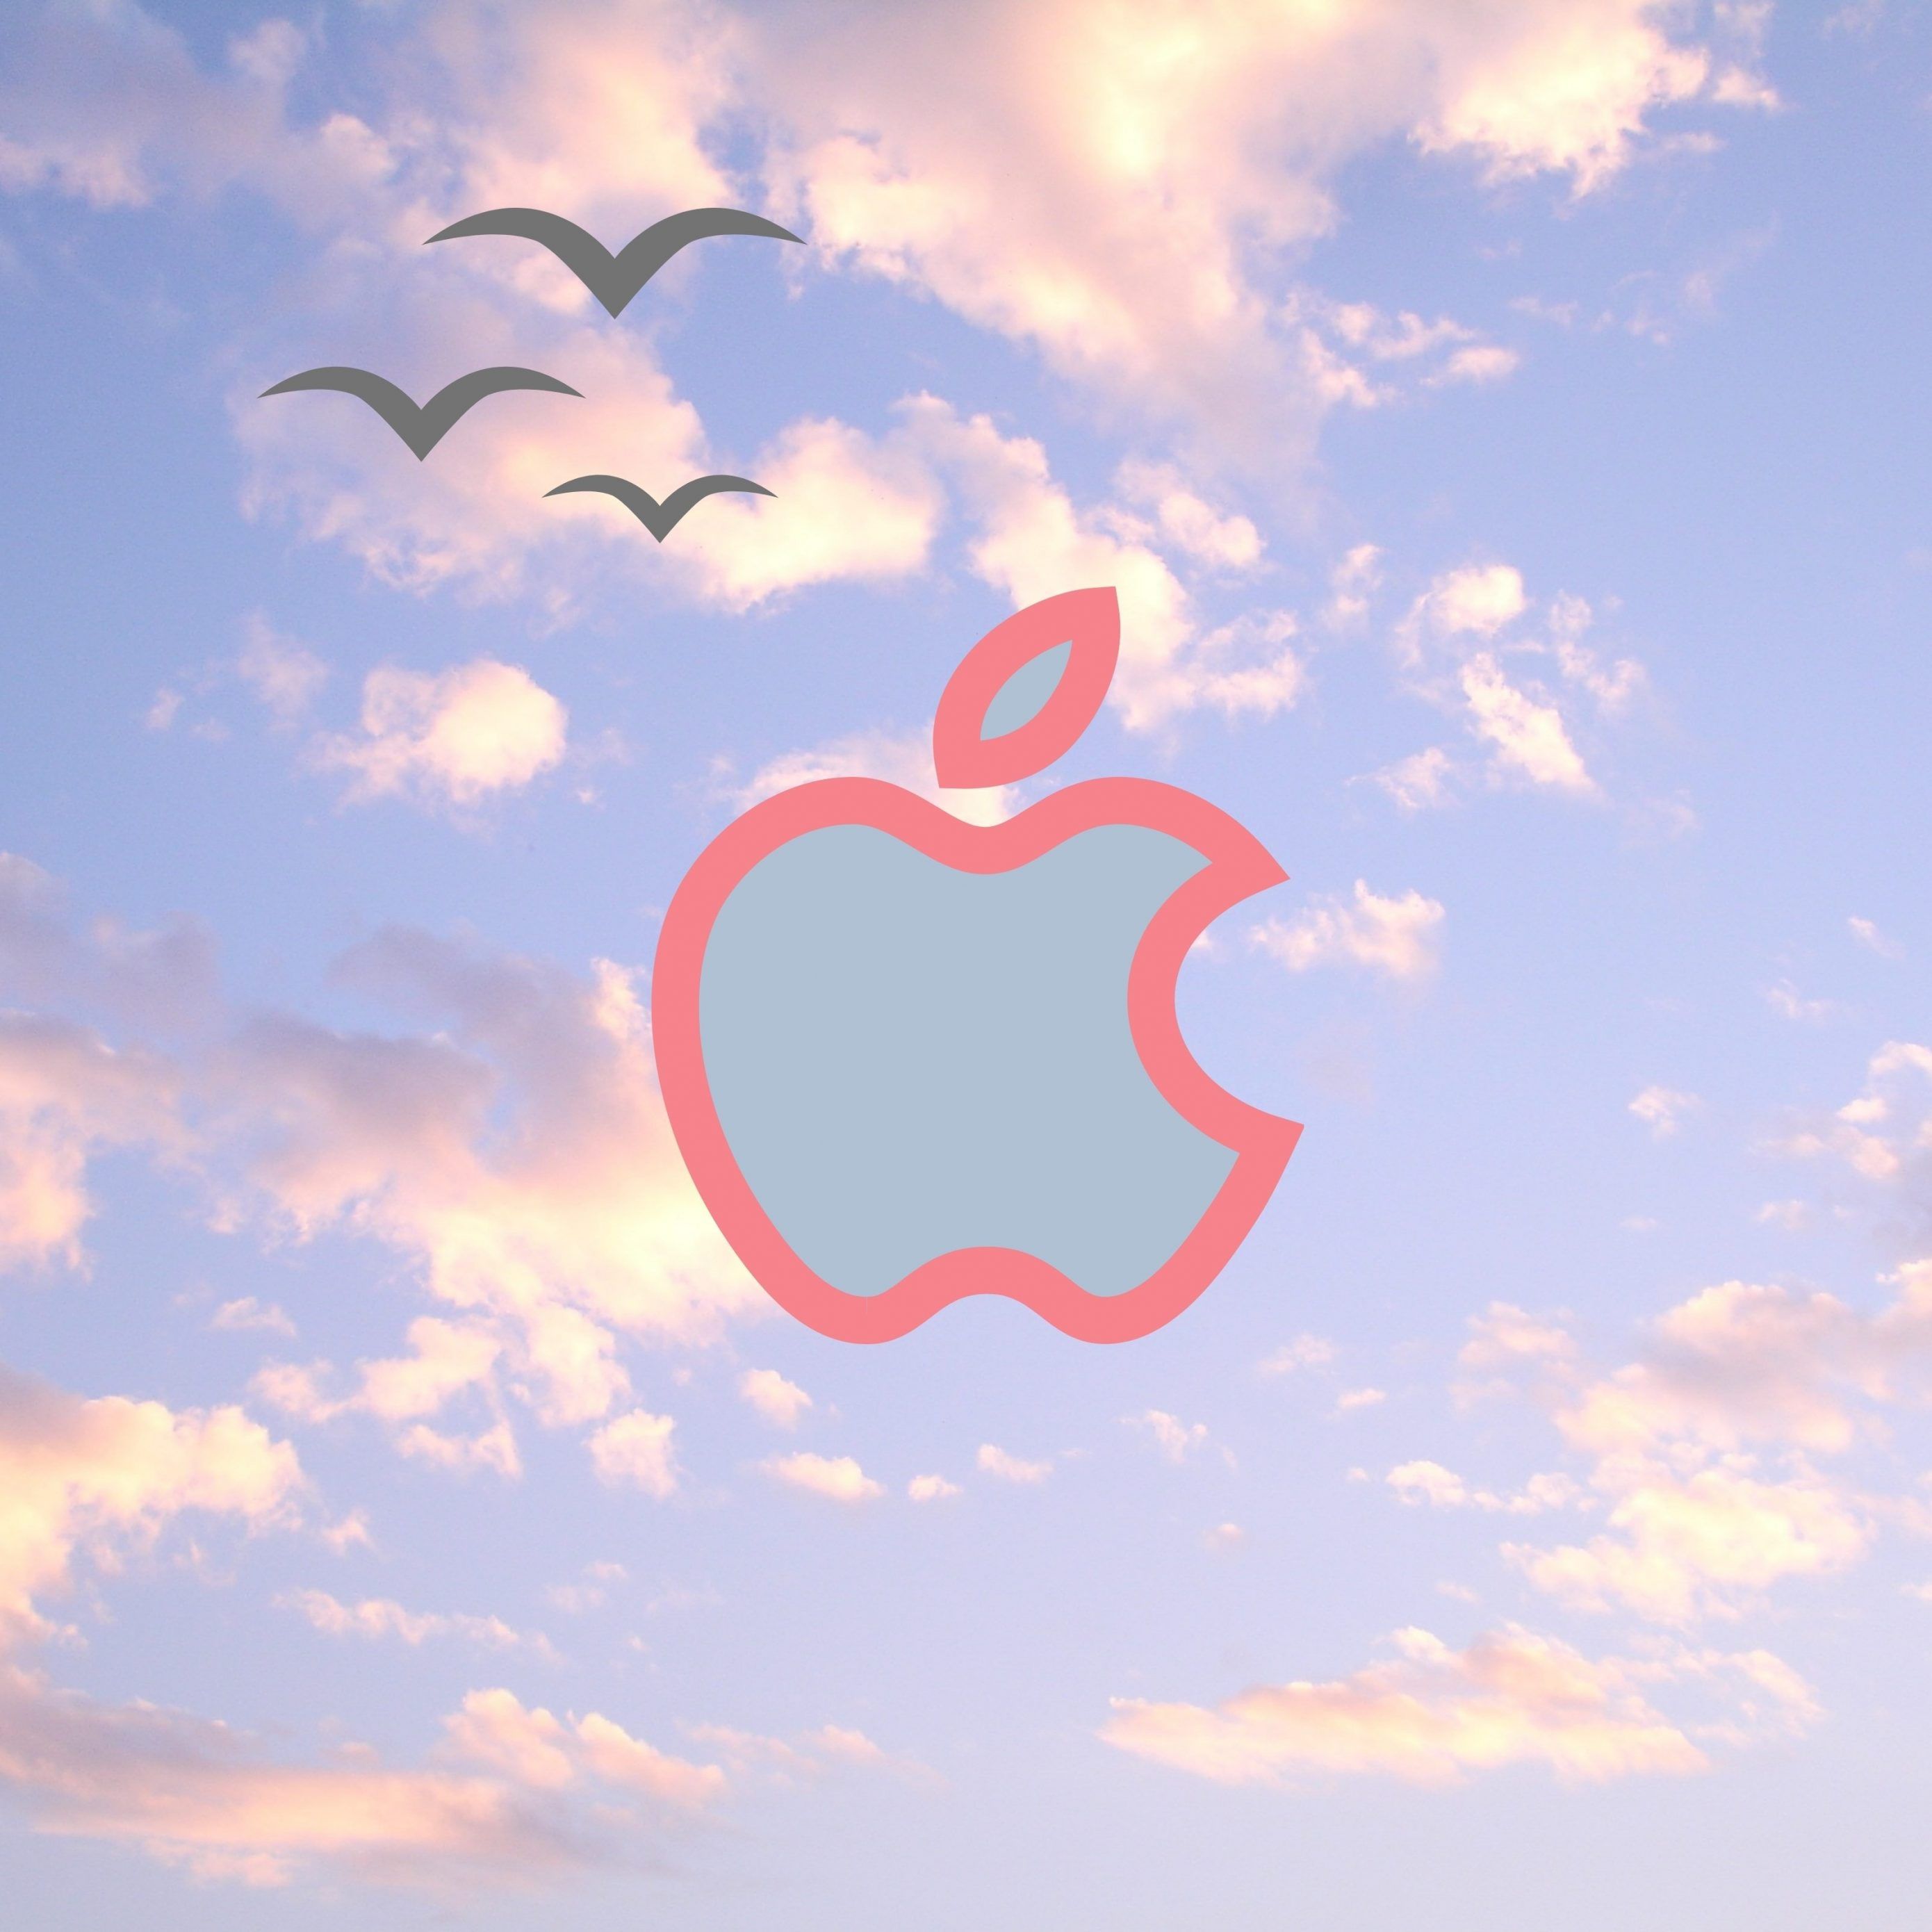 Apple Hintergrundbild 2780x2780. Apple Logo Pink Blue Sky Clouds Birds iPad Wallpaper iPad Wallpaper 4k iPad Wallpaper 5k free download iPad Pro, iPad Mini, iPad Air, iOS, iPadOS, Parallax, iPad retina Wallpaper